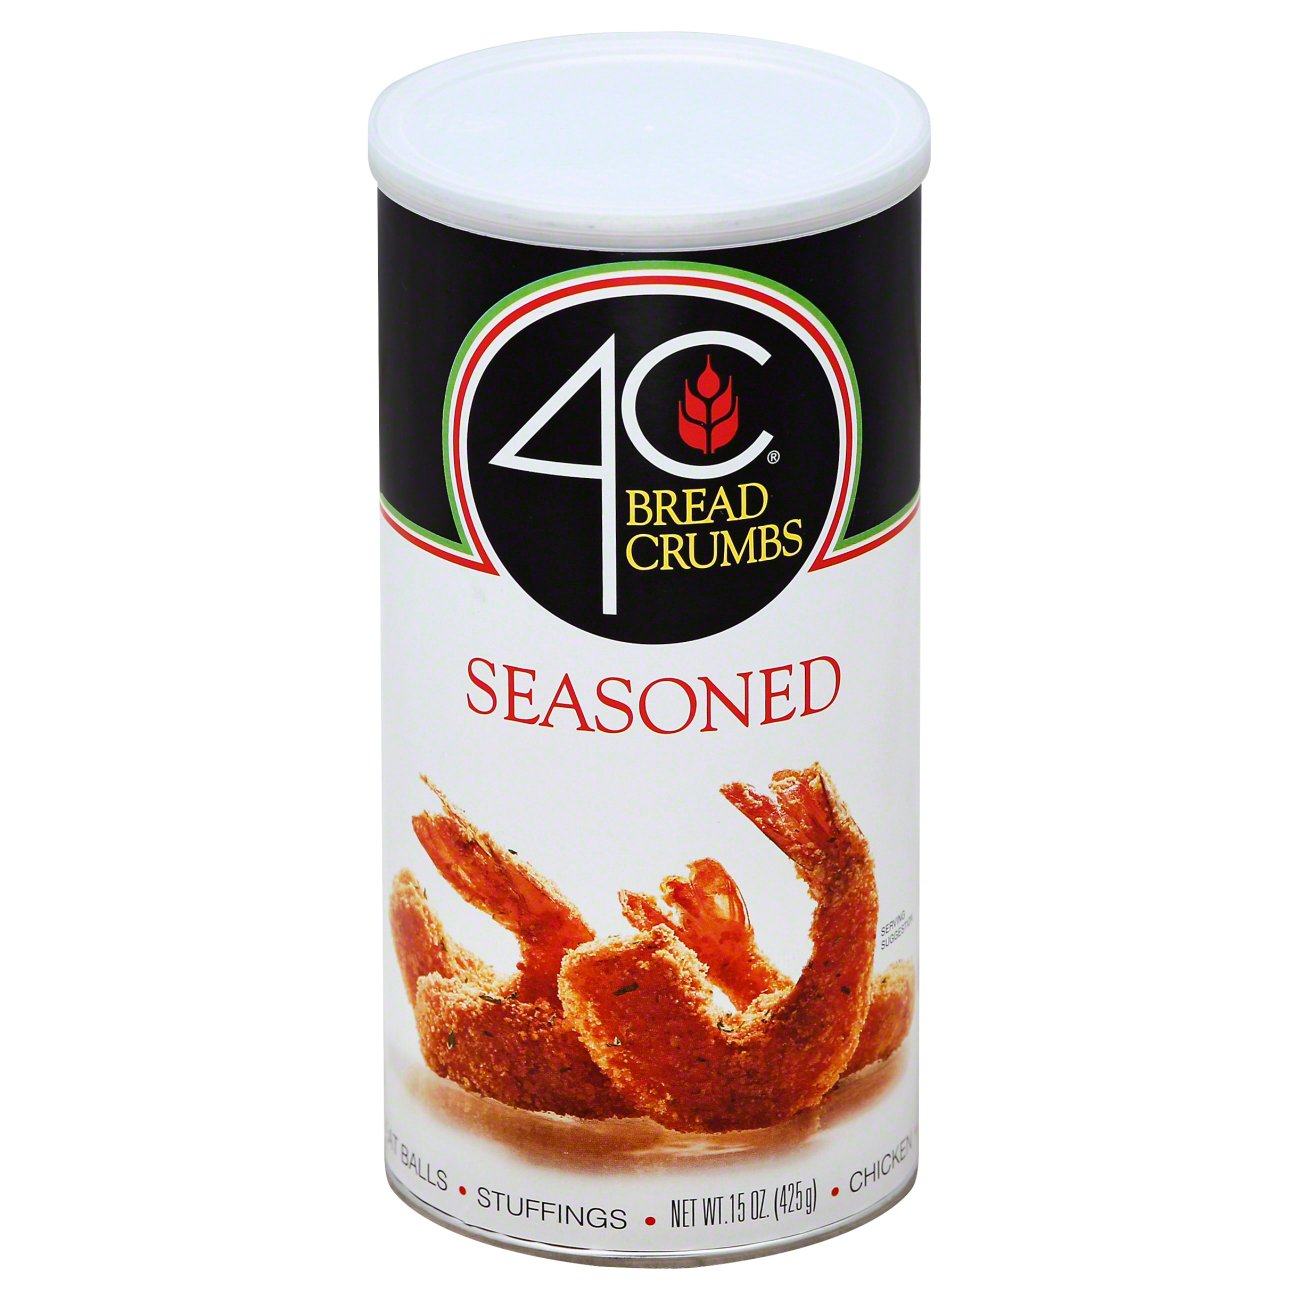 Panko Seasoned Bread Crumbs - 4C Foods